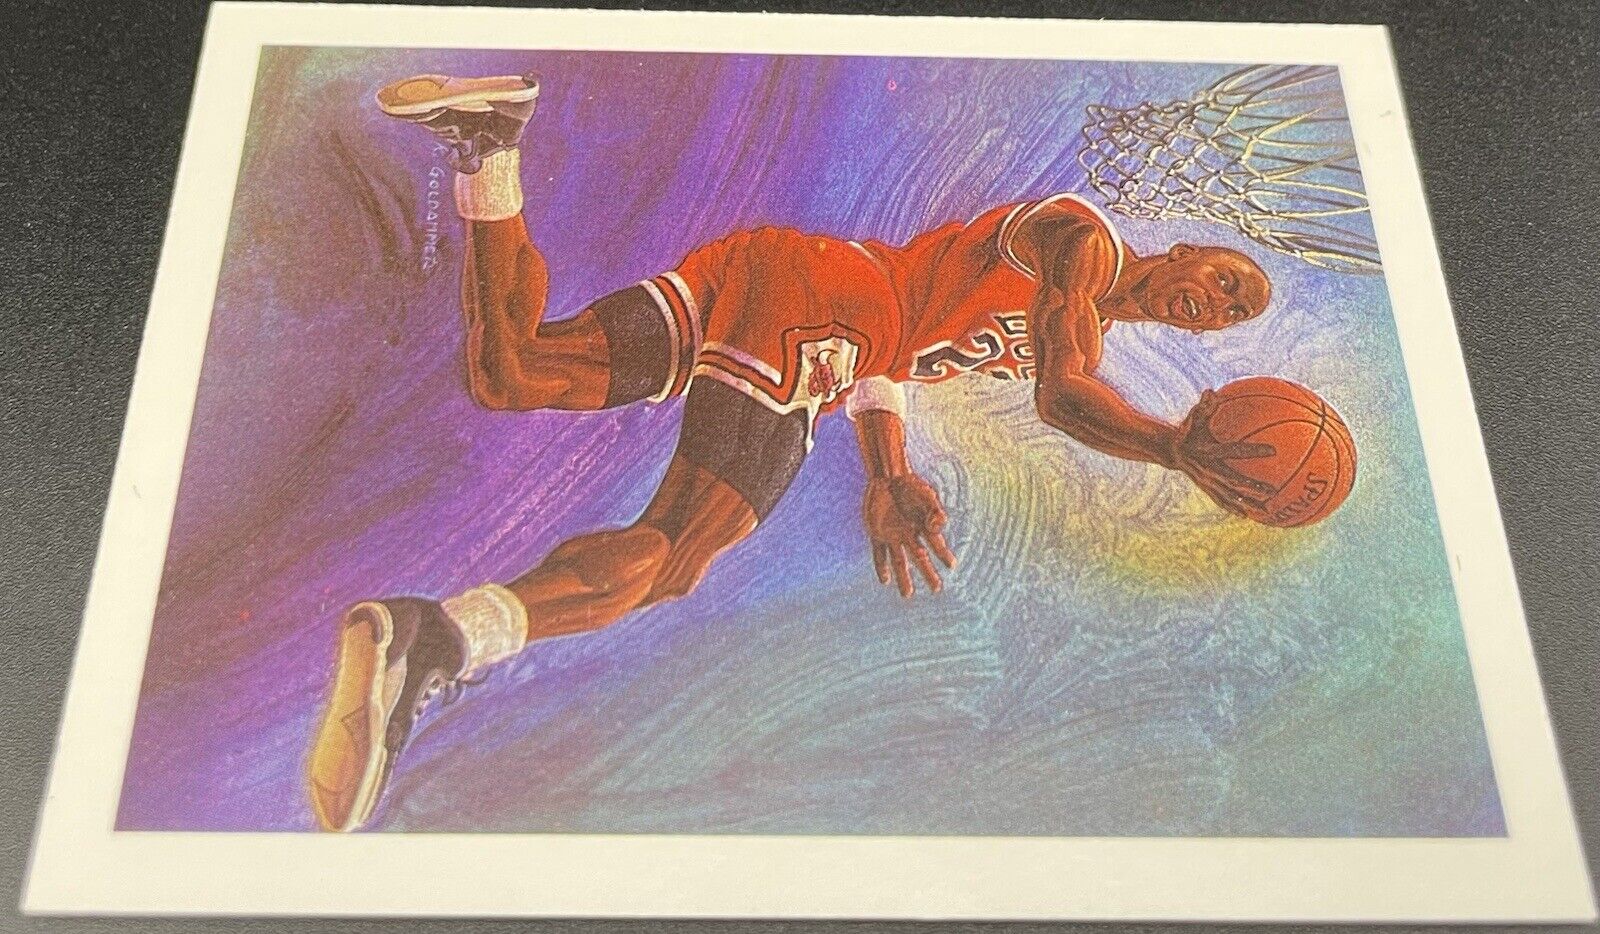 1990-91 NBA Hoops - Art Card Team Checklist #358 Michael Jordan